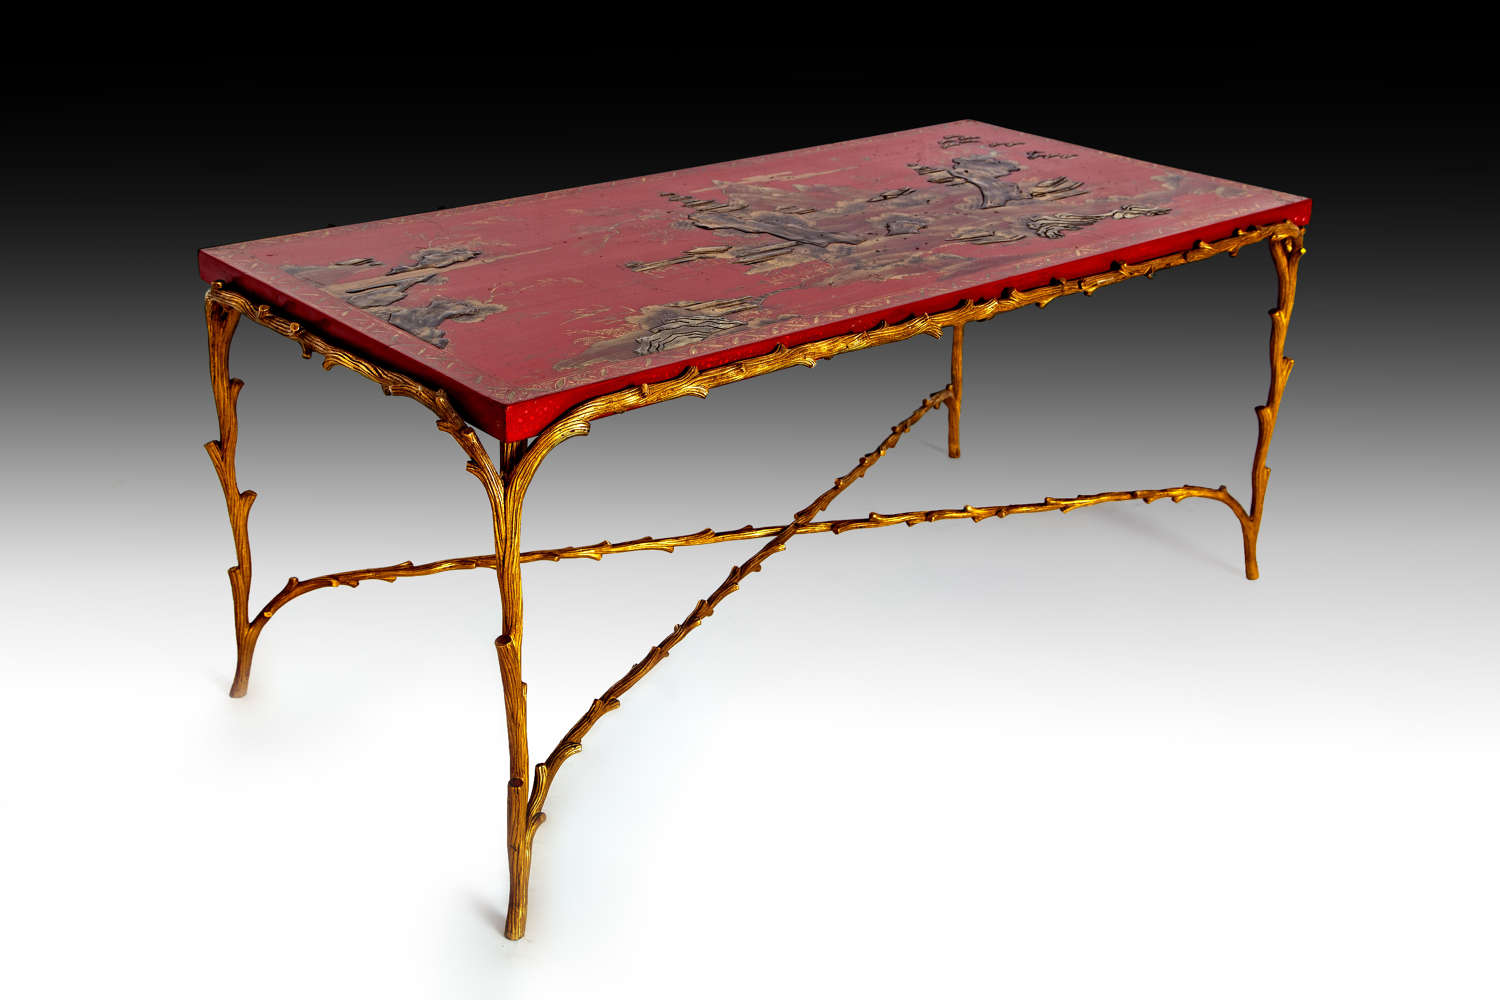 A rare mid 20th century Maison Jansen laquer table